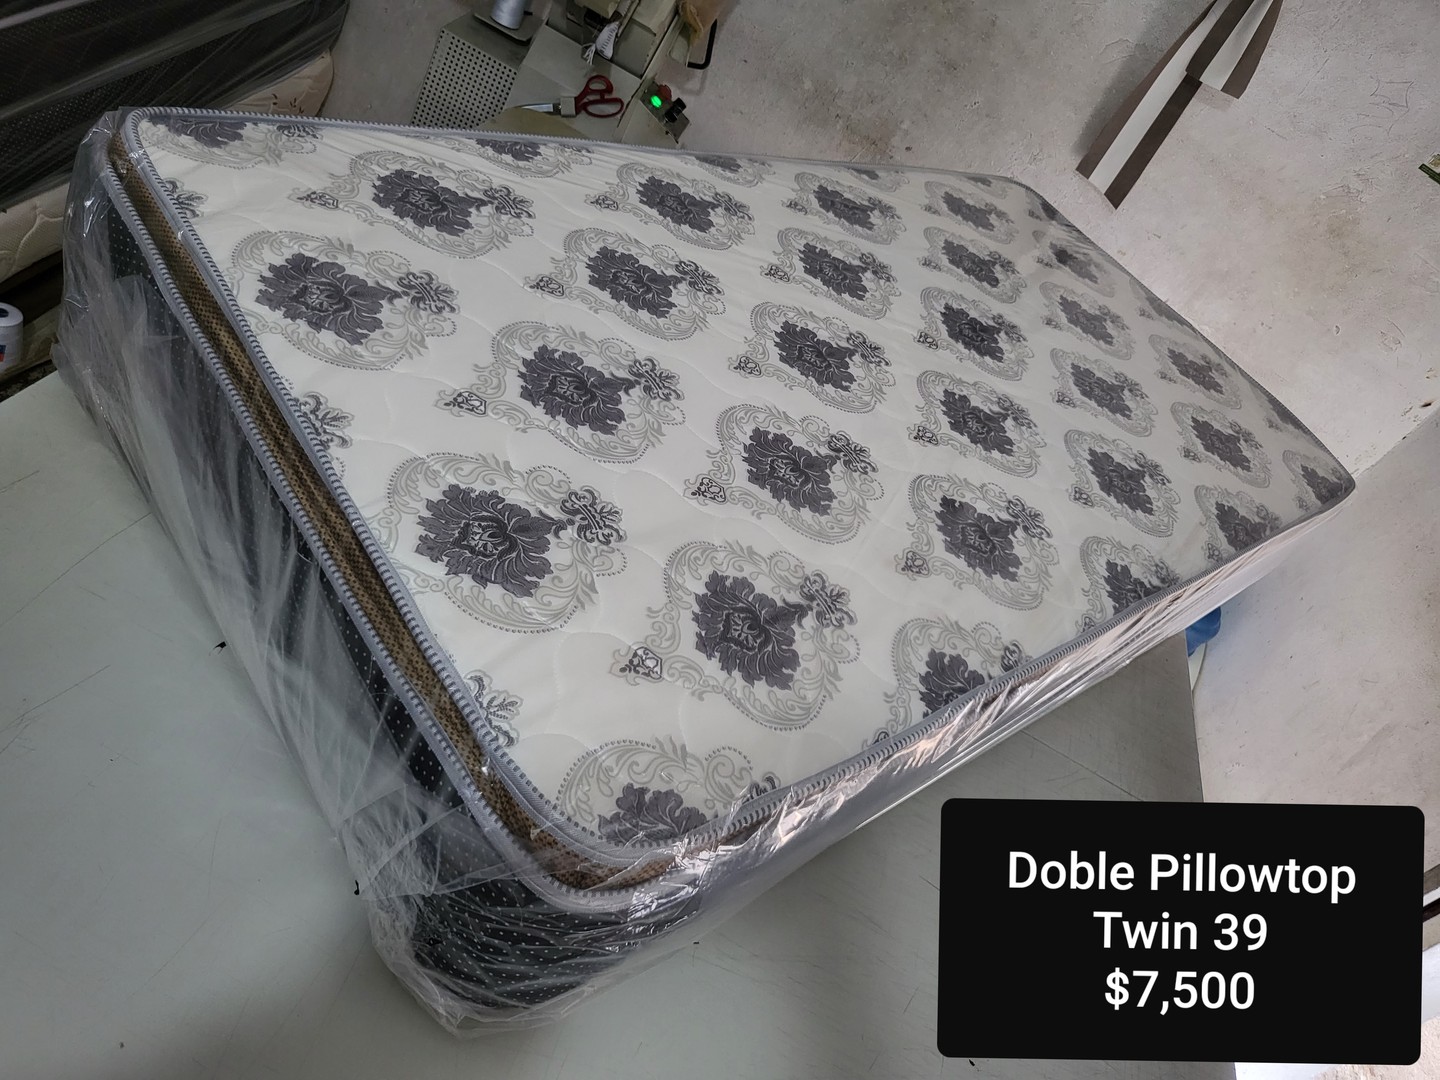 COlchon Twin 39 Doble Pillow Top Pillowtop